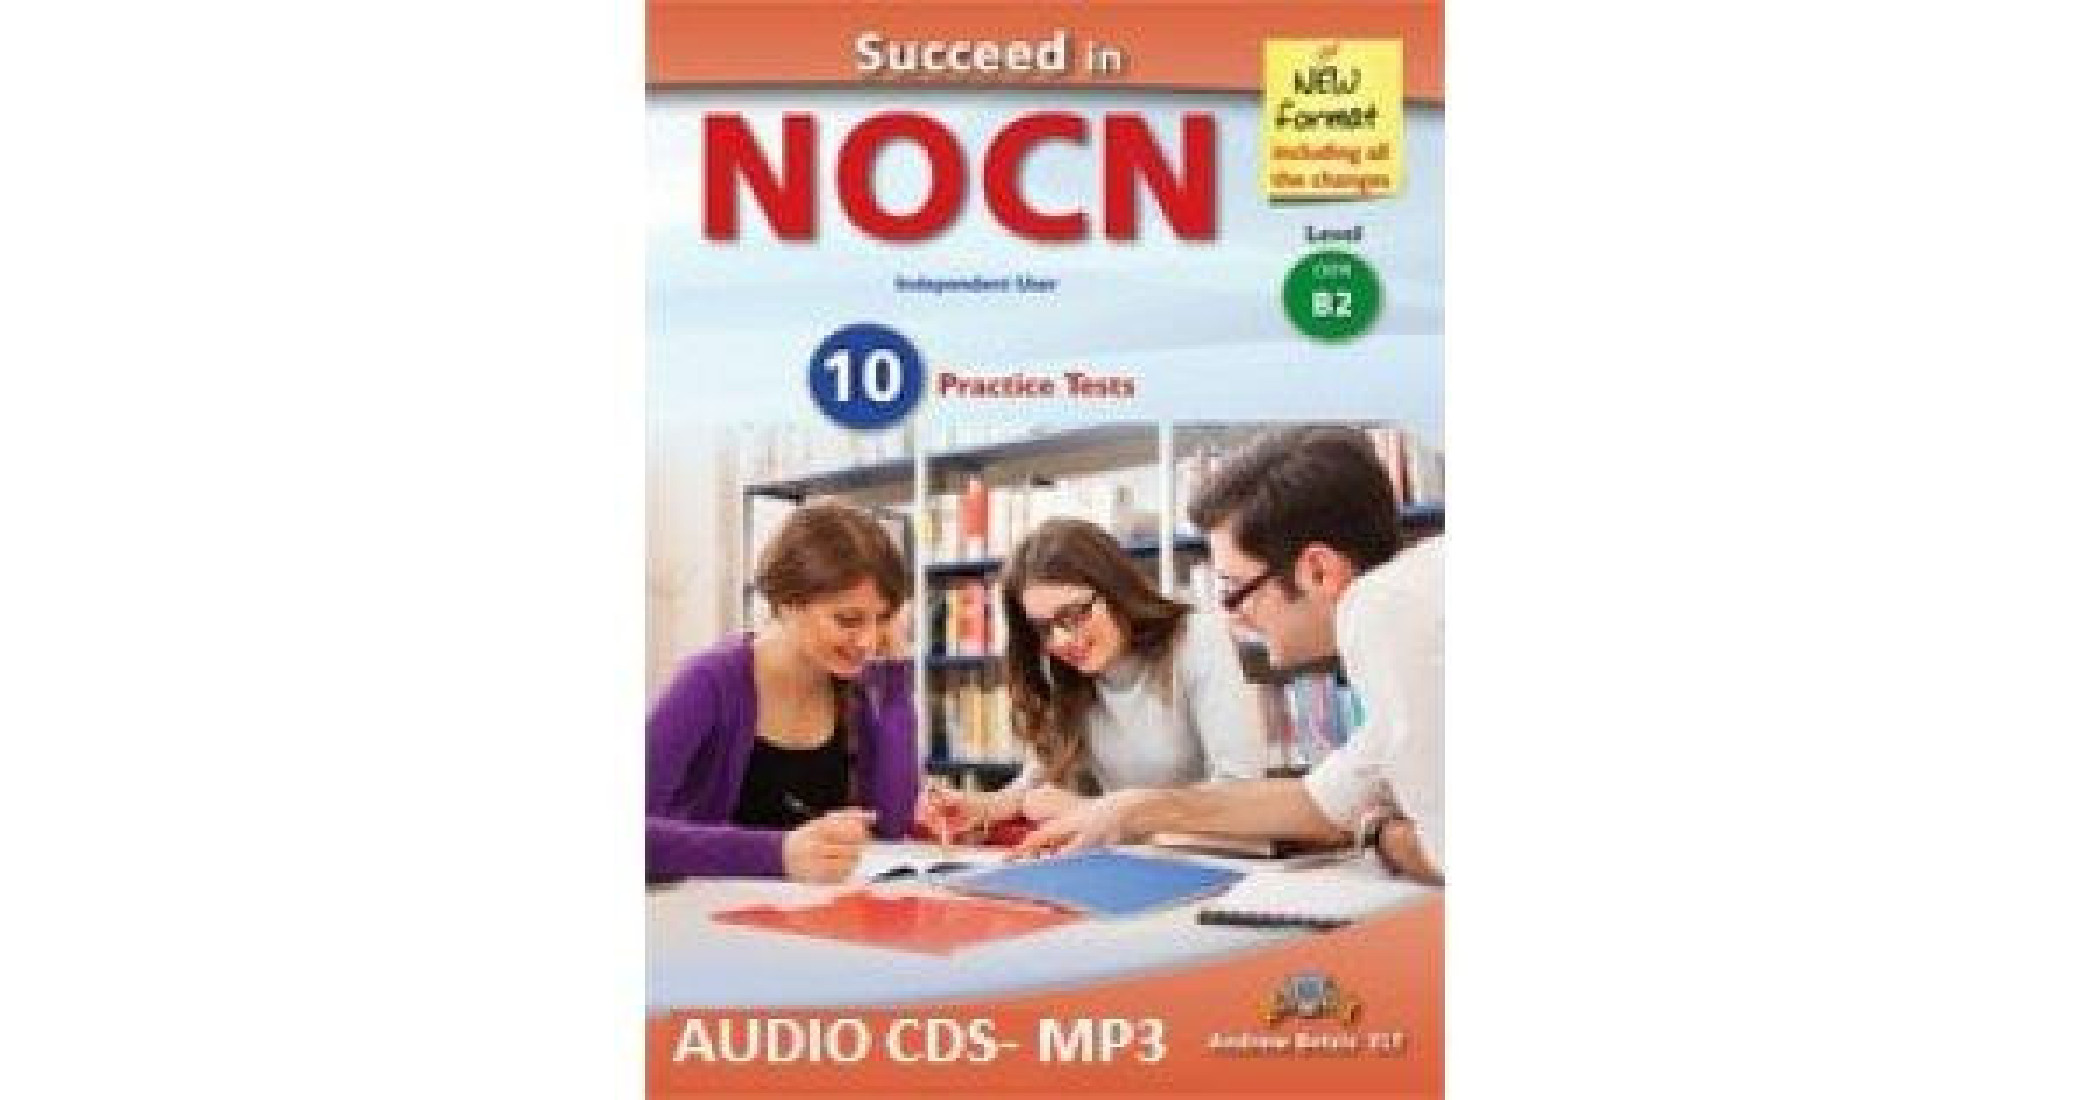 SUCCEED IN NOCN B2 10 PRACTICE TESTS CD MP3 NEW FORMAT 2015